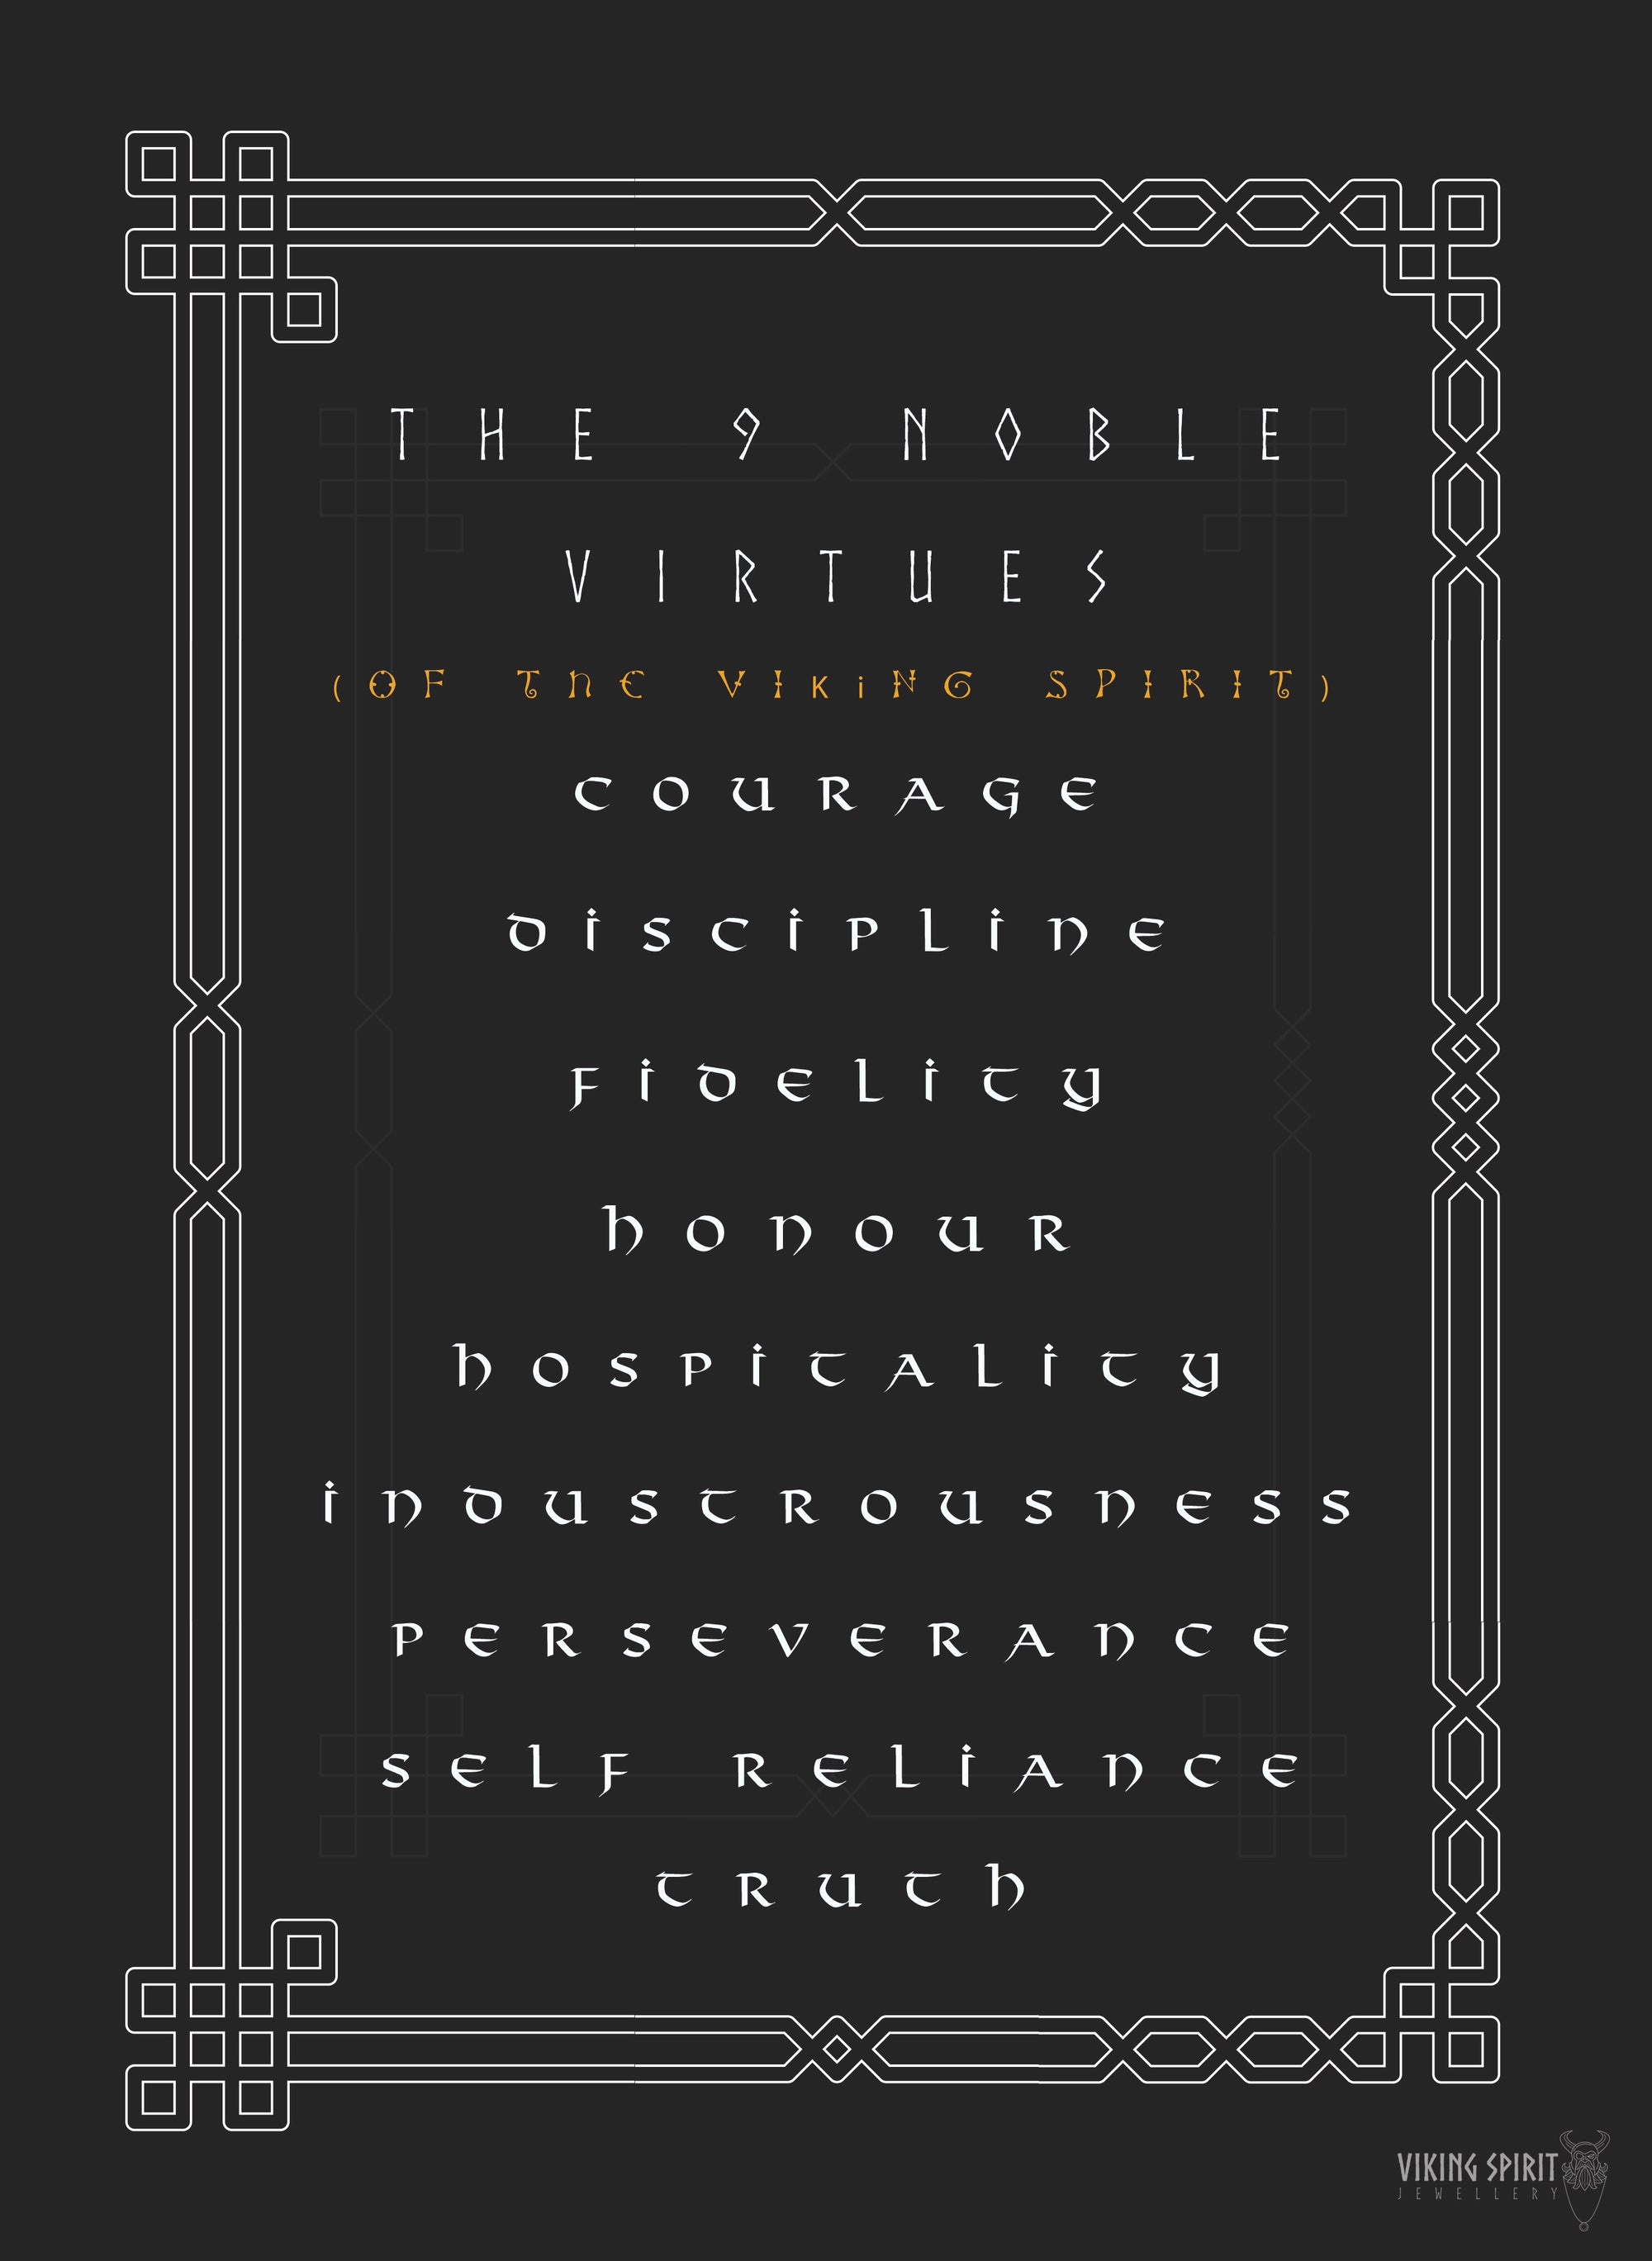 The 9 Noble Virtues - Viking Spirit Jewellery 